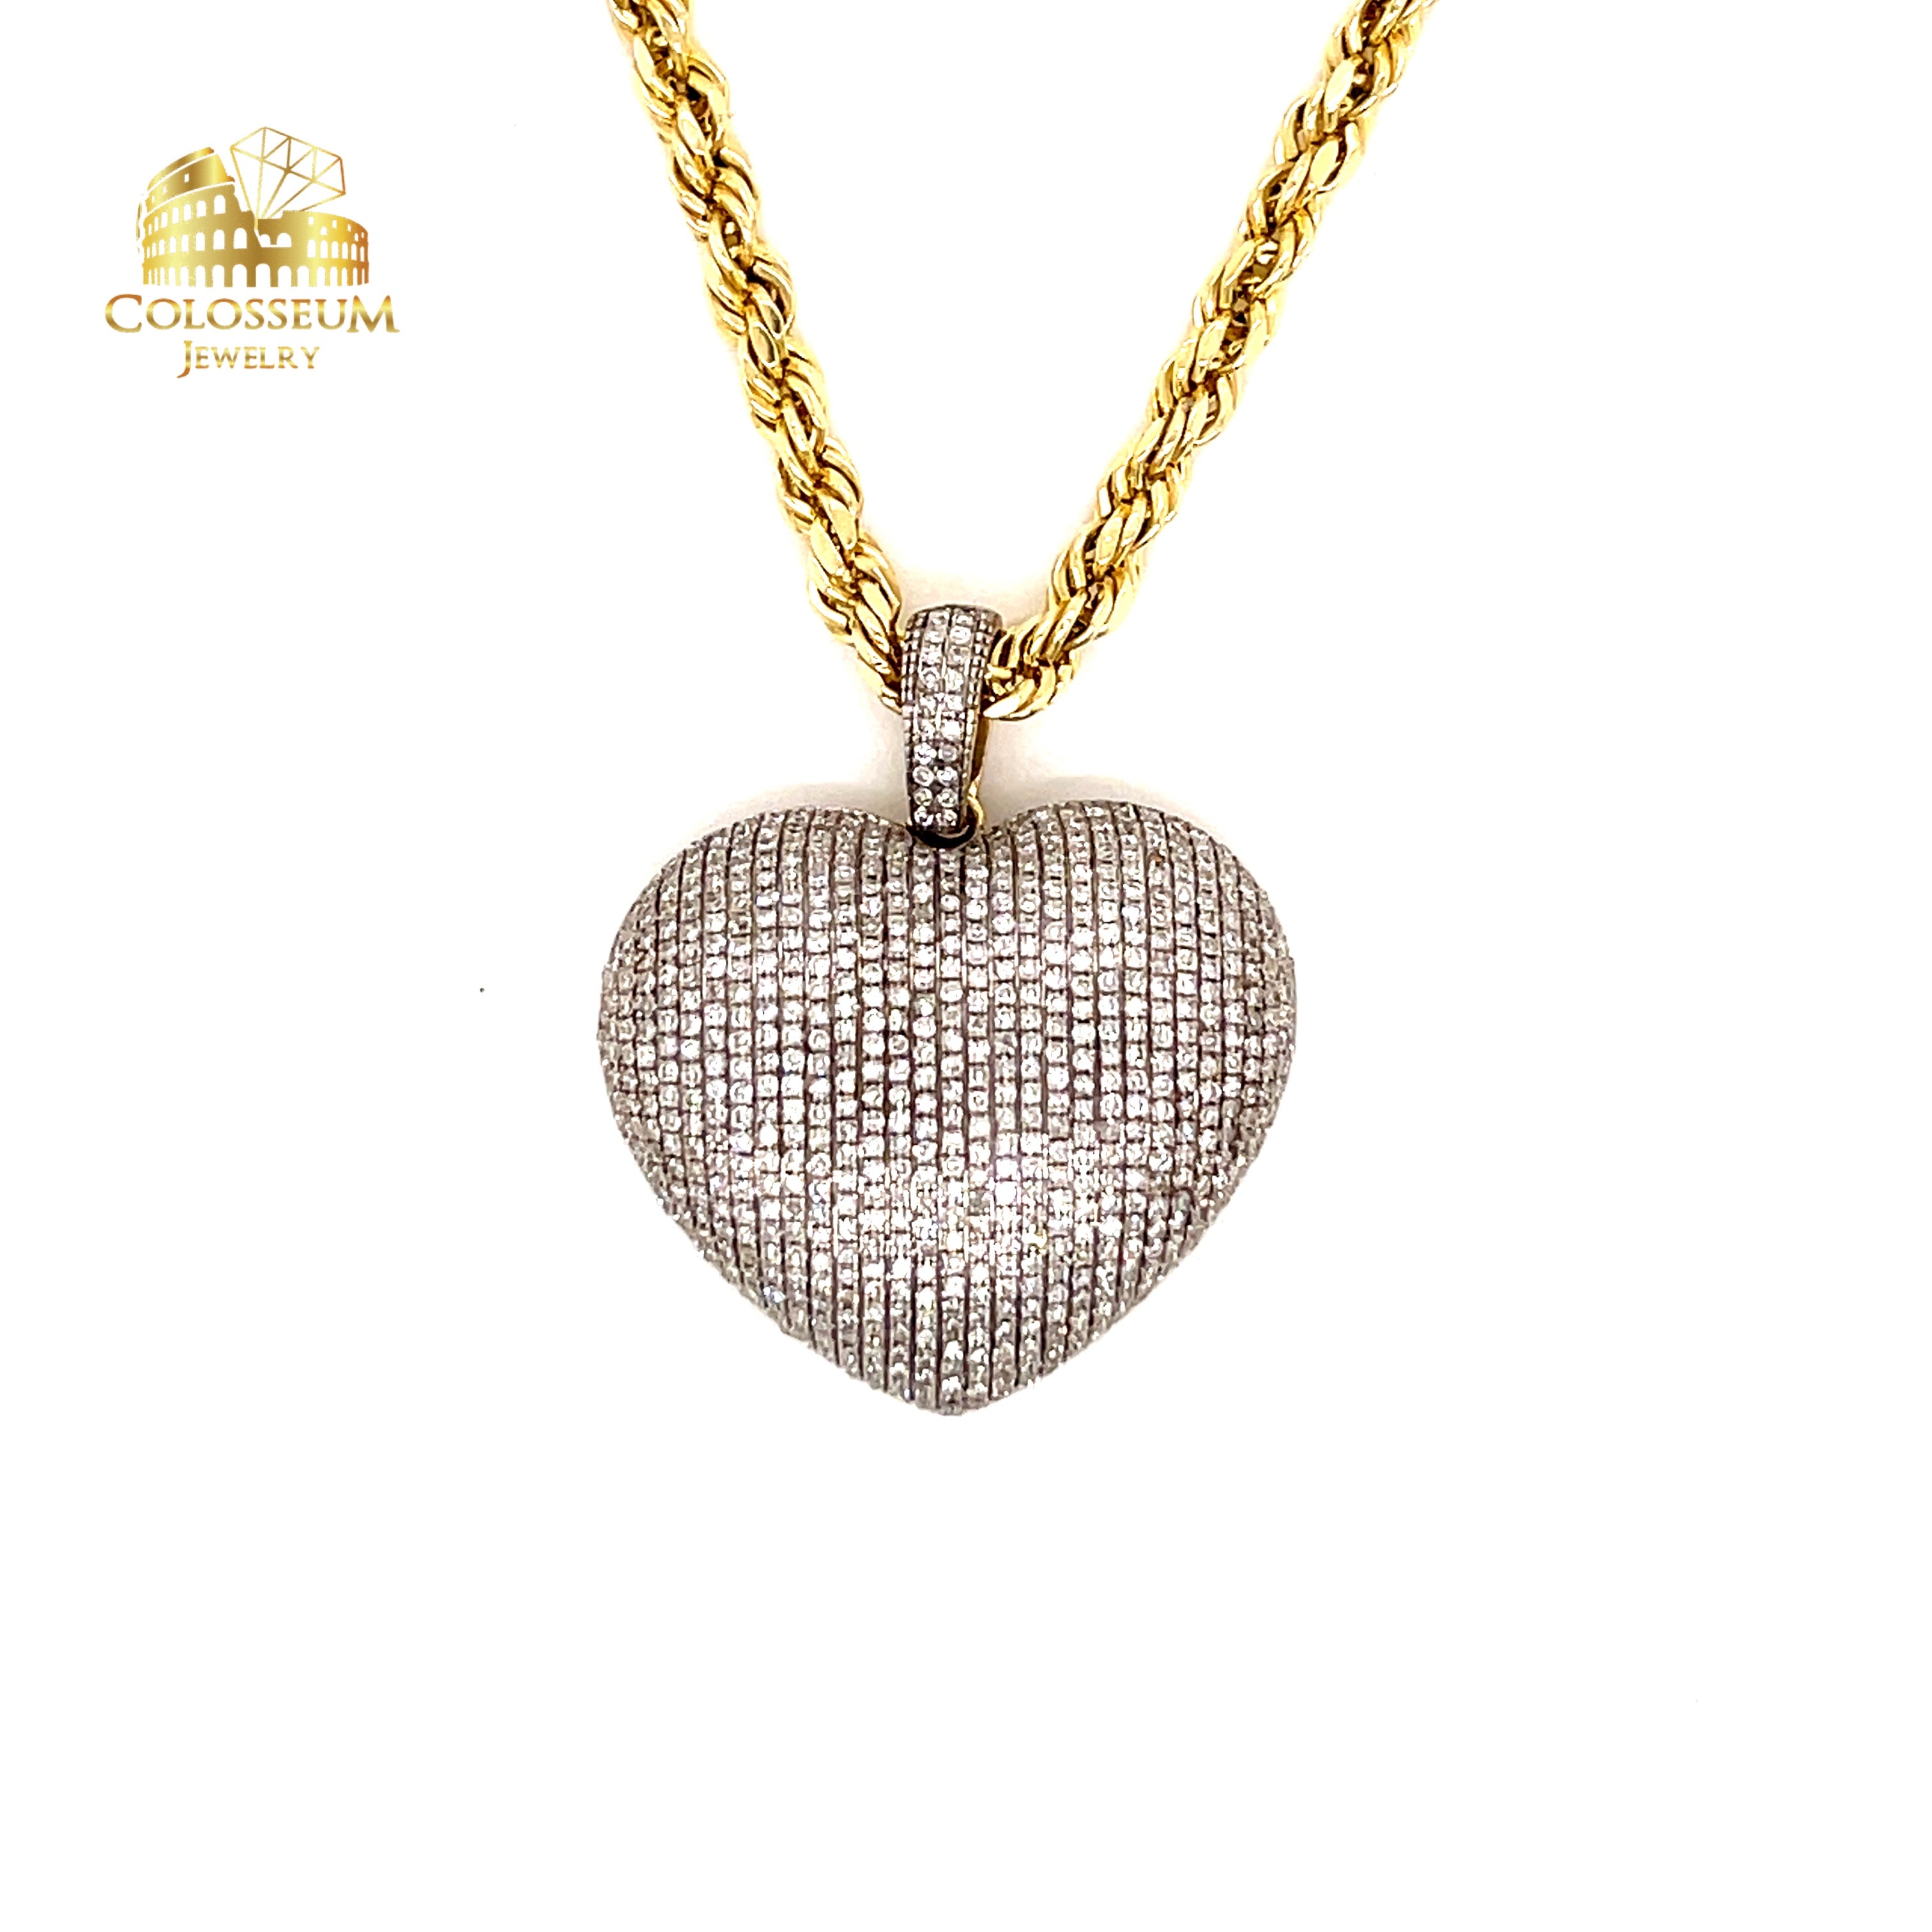 10K Yellow Gold Heart Diamond Charm - 1.15ctw